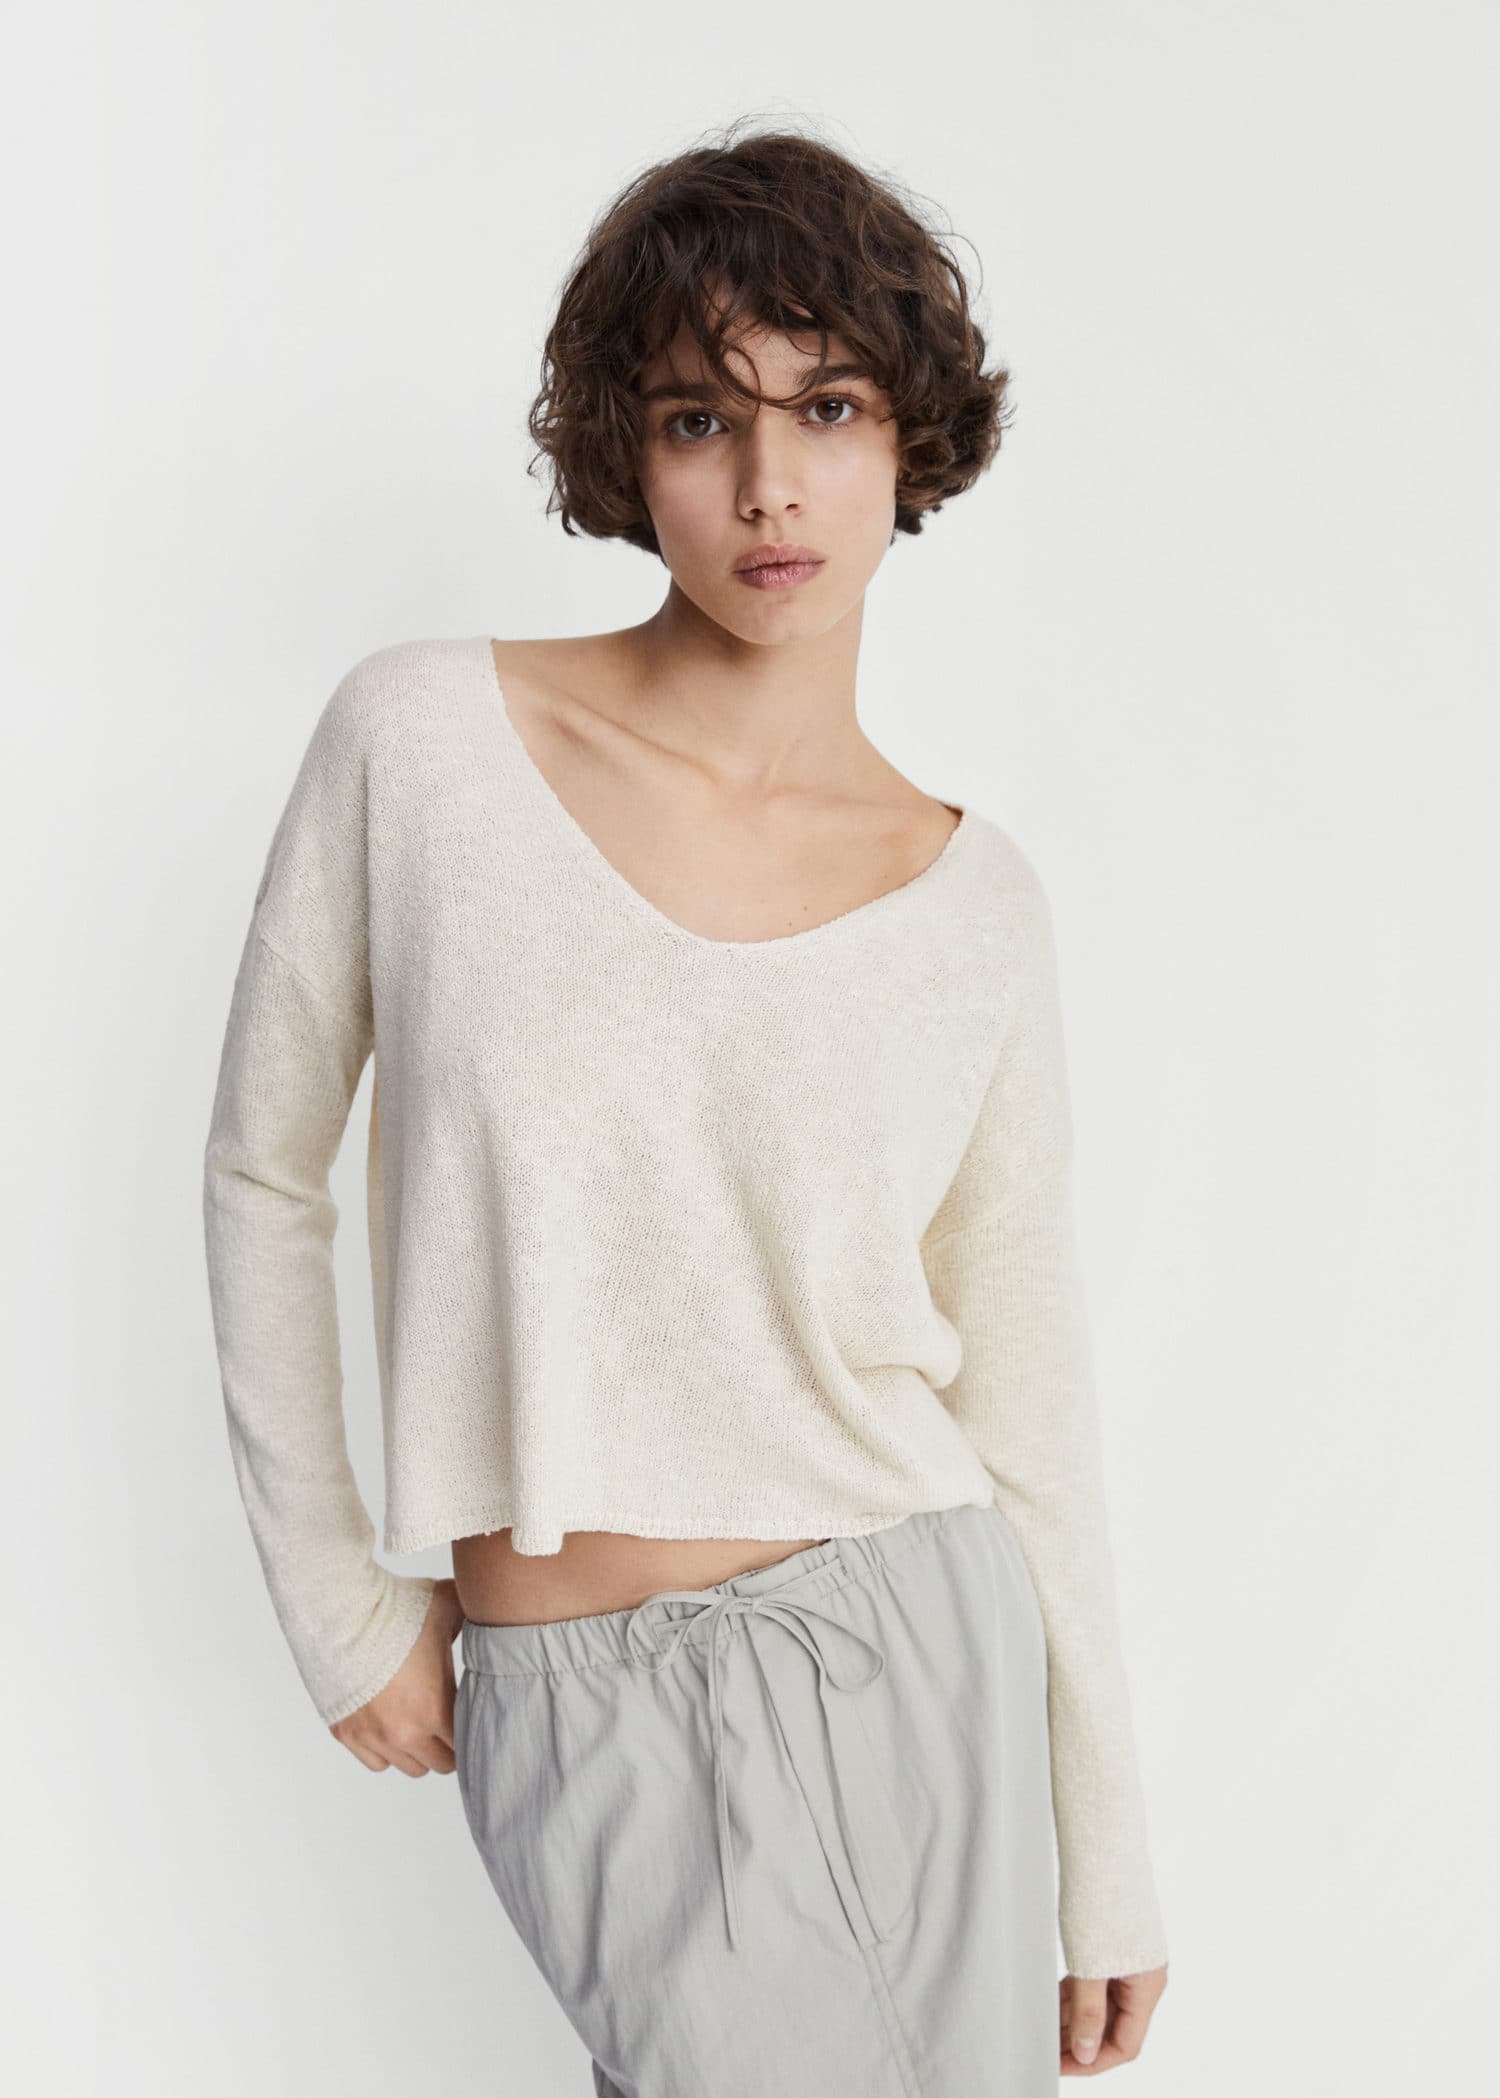 Low-cut neck sweater - Middenvlak